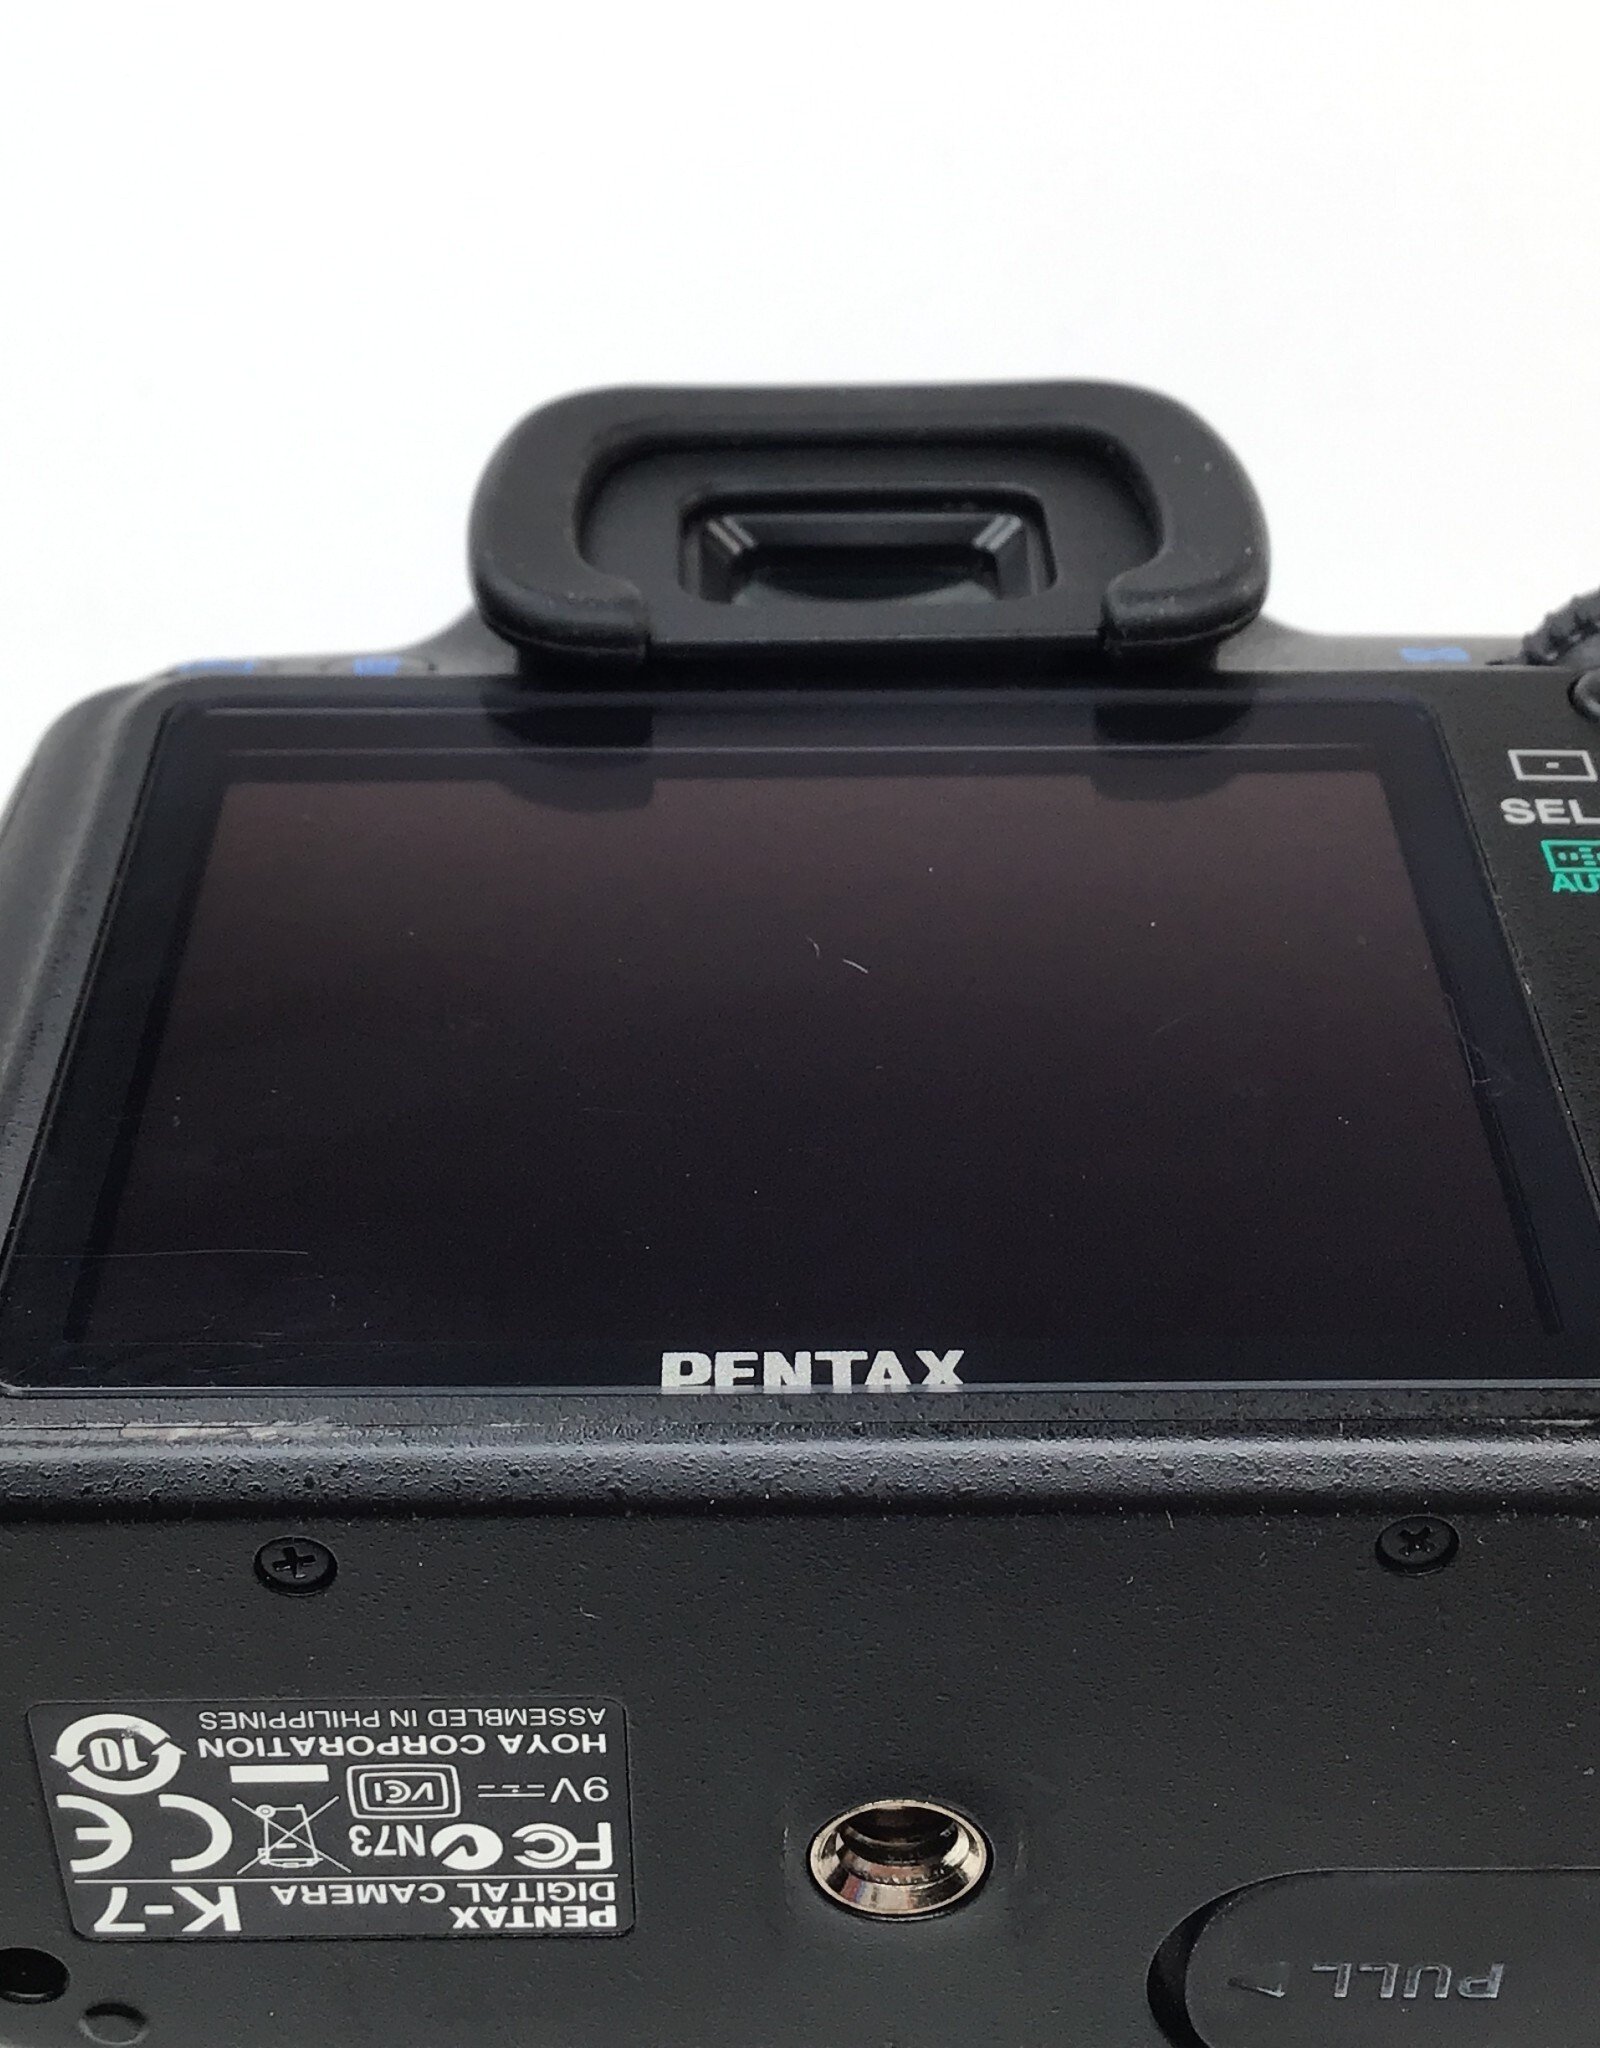 Pentax K-7 Camera w/ Tamron 18-250mm Used Good - Biggs Camera